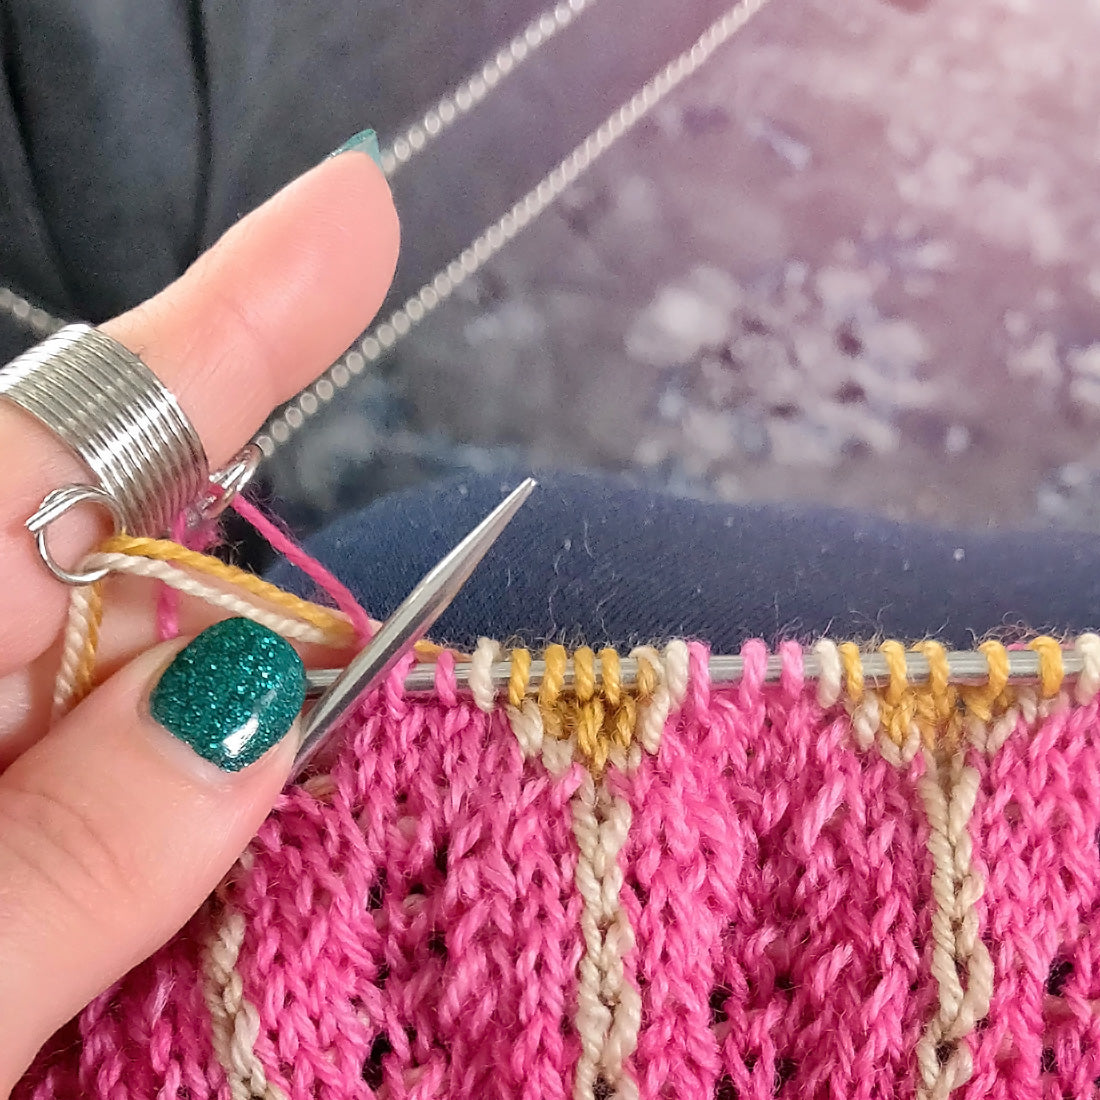  YICBOR Metal Knitting Thimble Norwegian with 2 Yarn Guides  #624144 Knitting Thimble with 4 Yarn Guides #624147